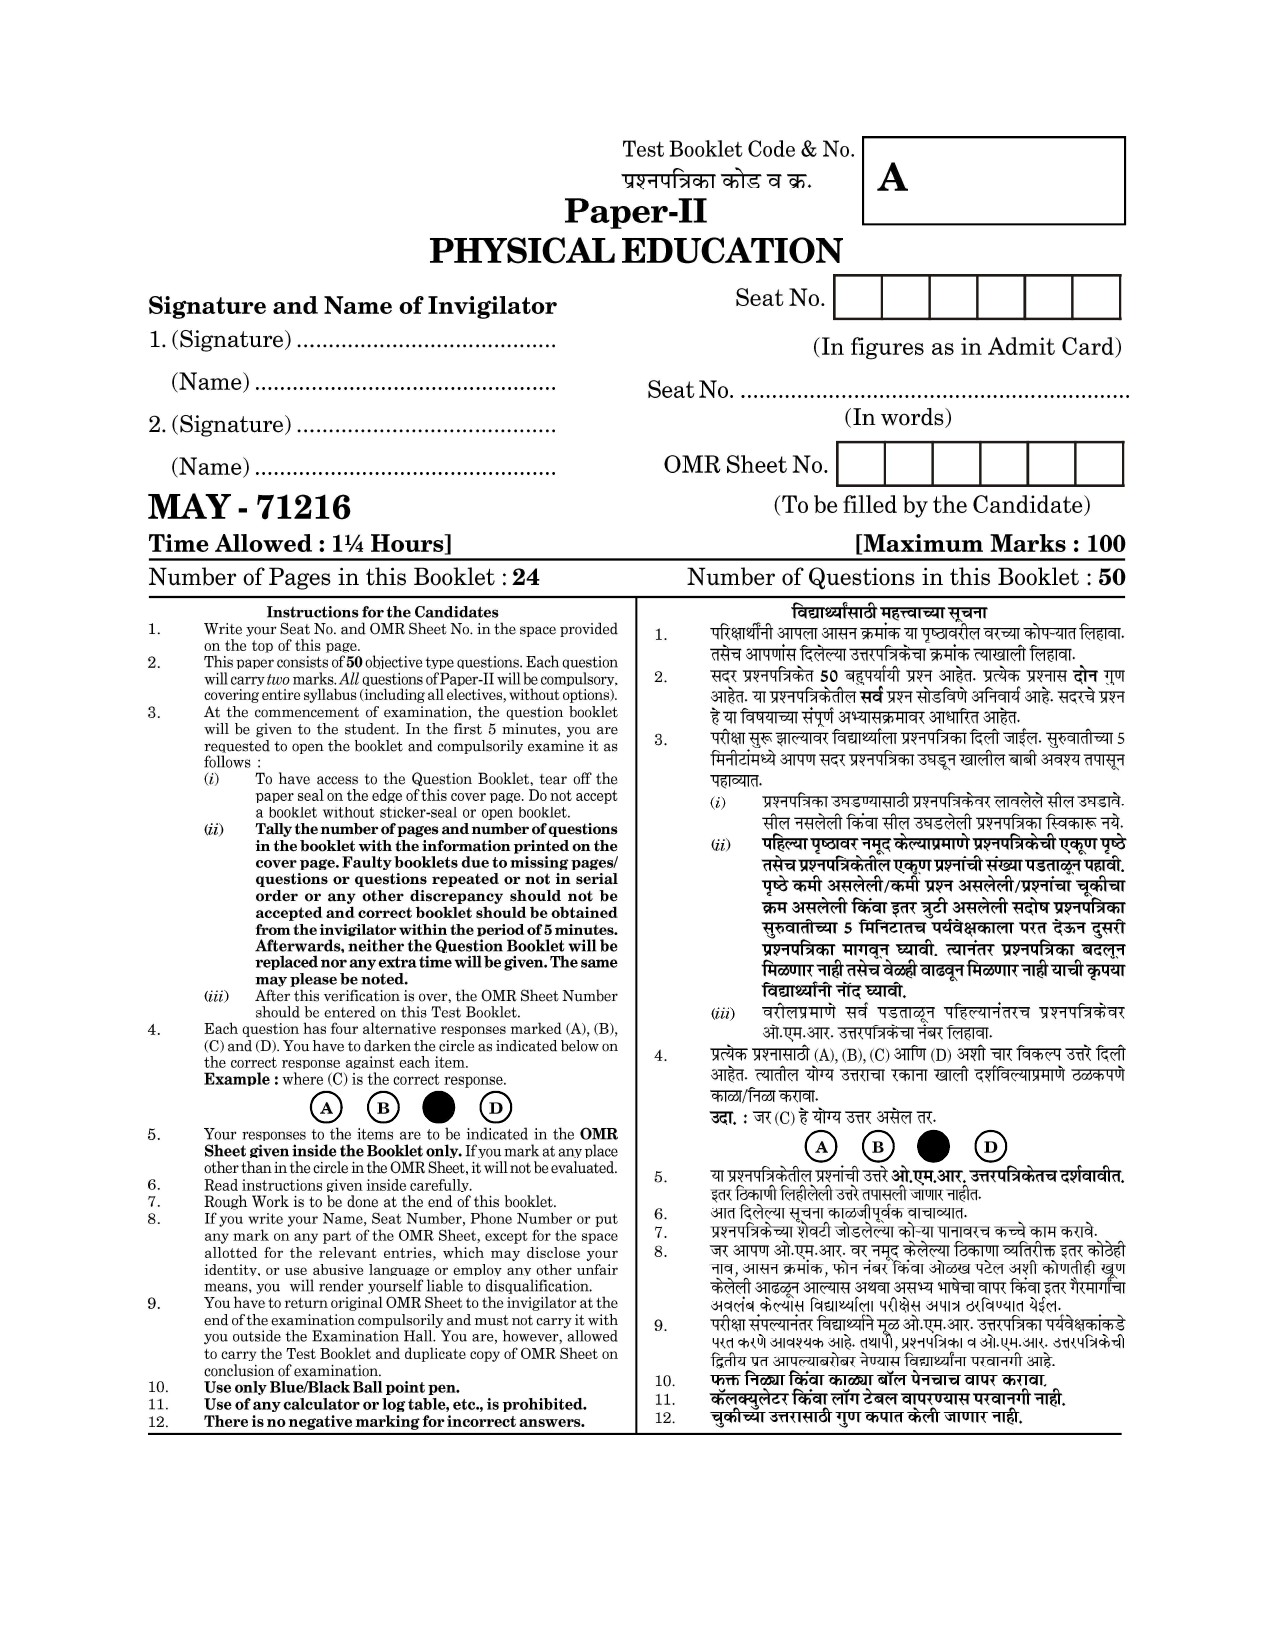 Maharashtra SET Physical Education Question Paper II May 2016 1